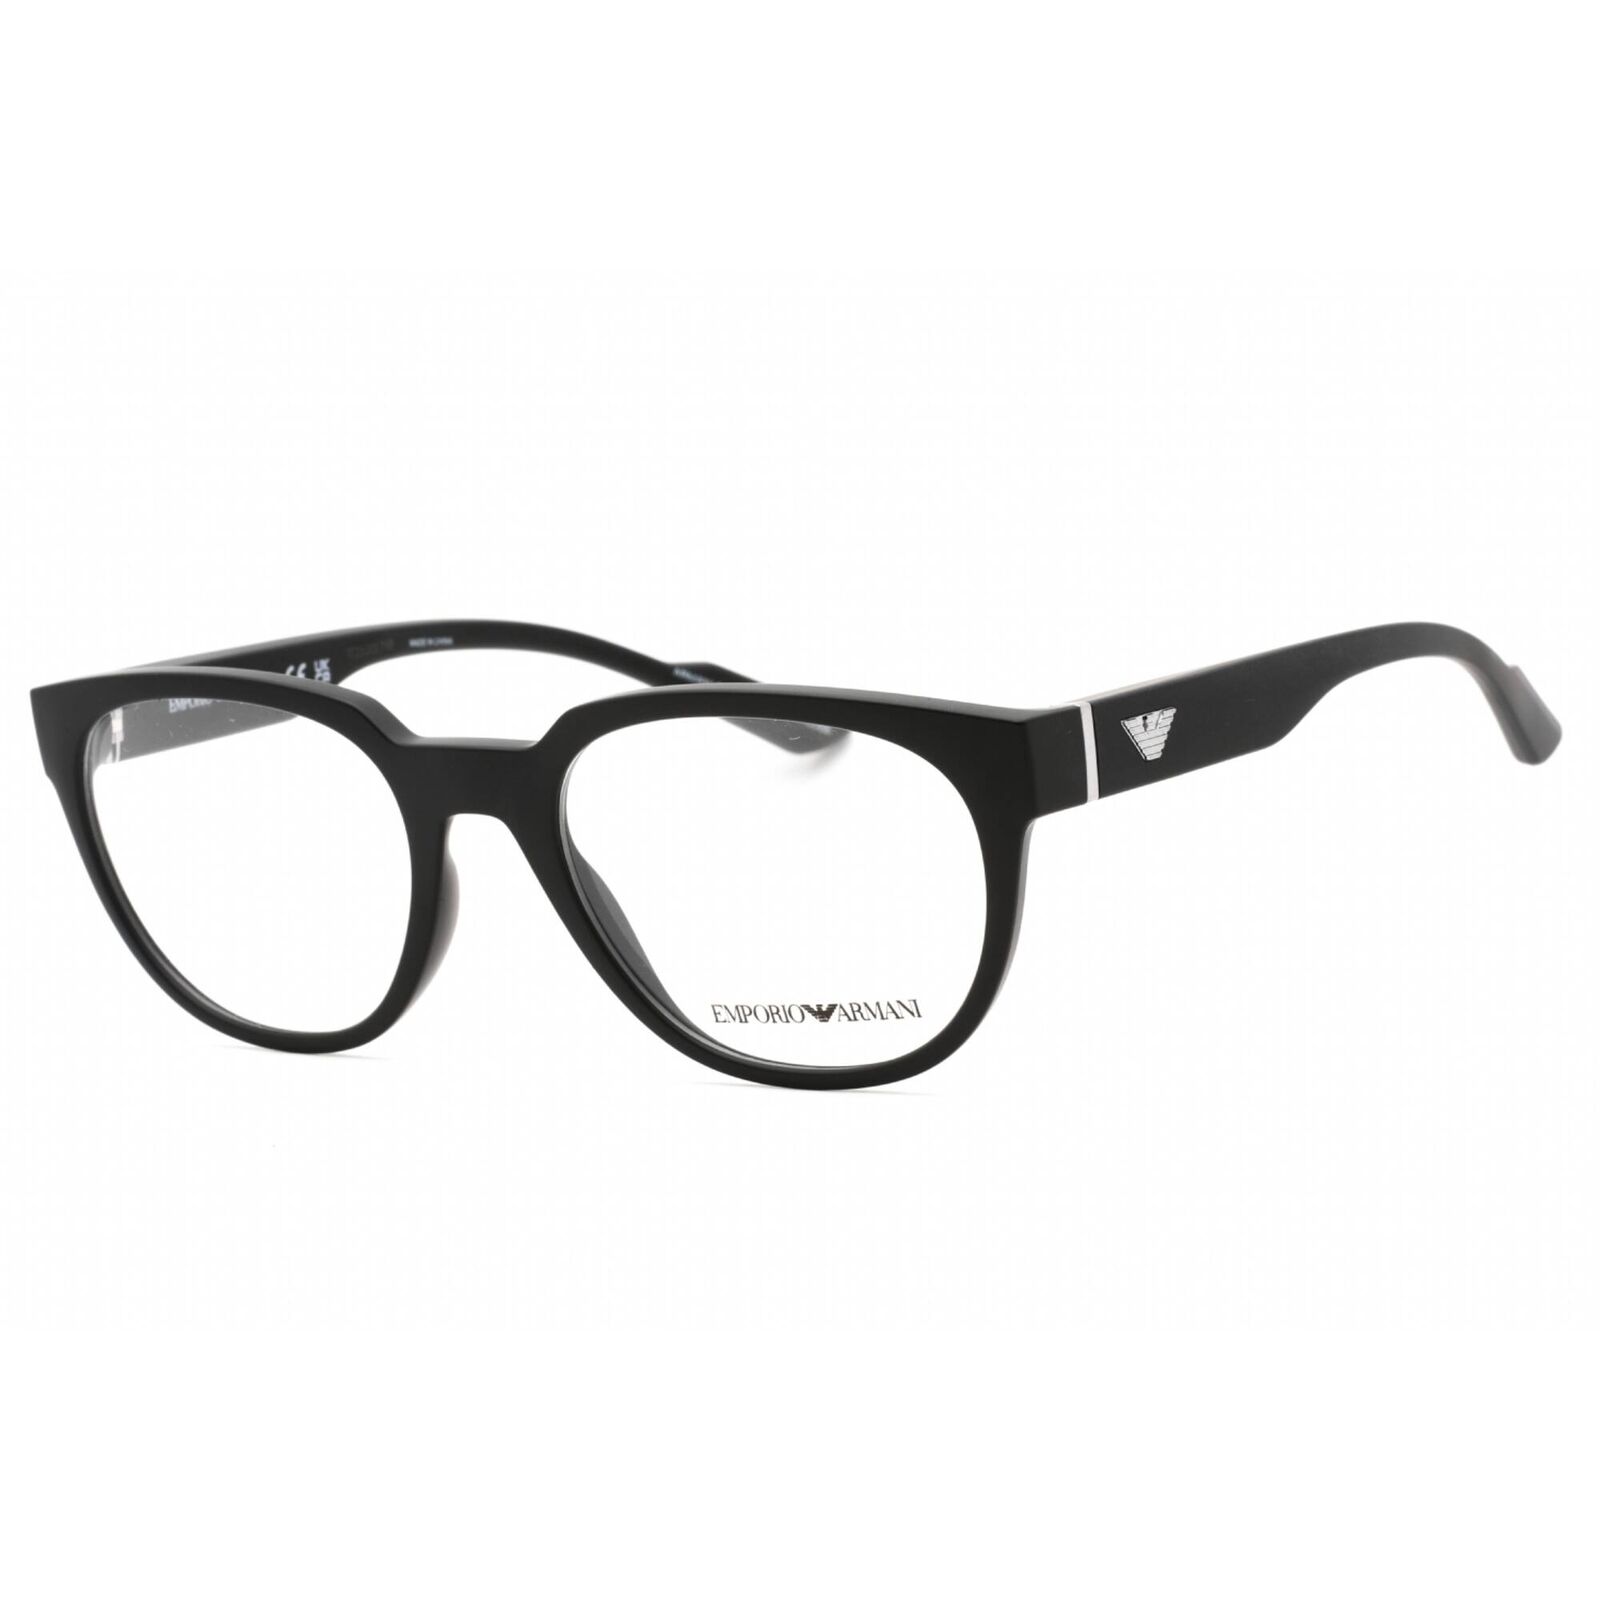 Emporio Armani Men's Eyeglasses Matte Black Full Rim Round Frame 0EA3224 5001 Emporio Armani 0EA3224 5001